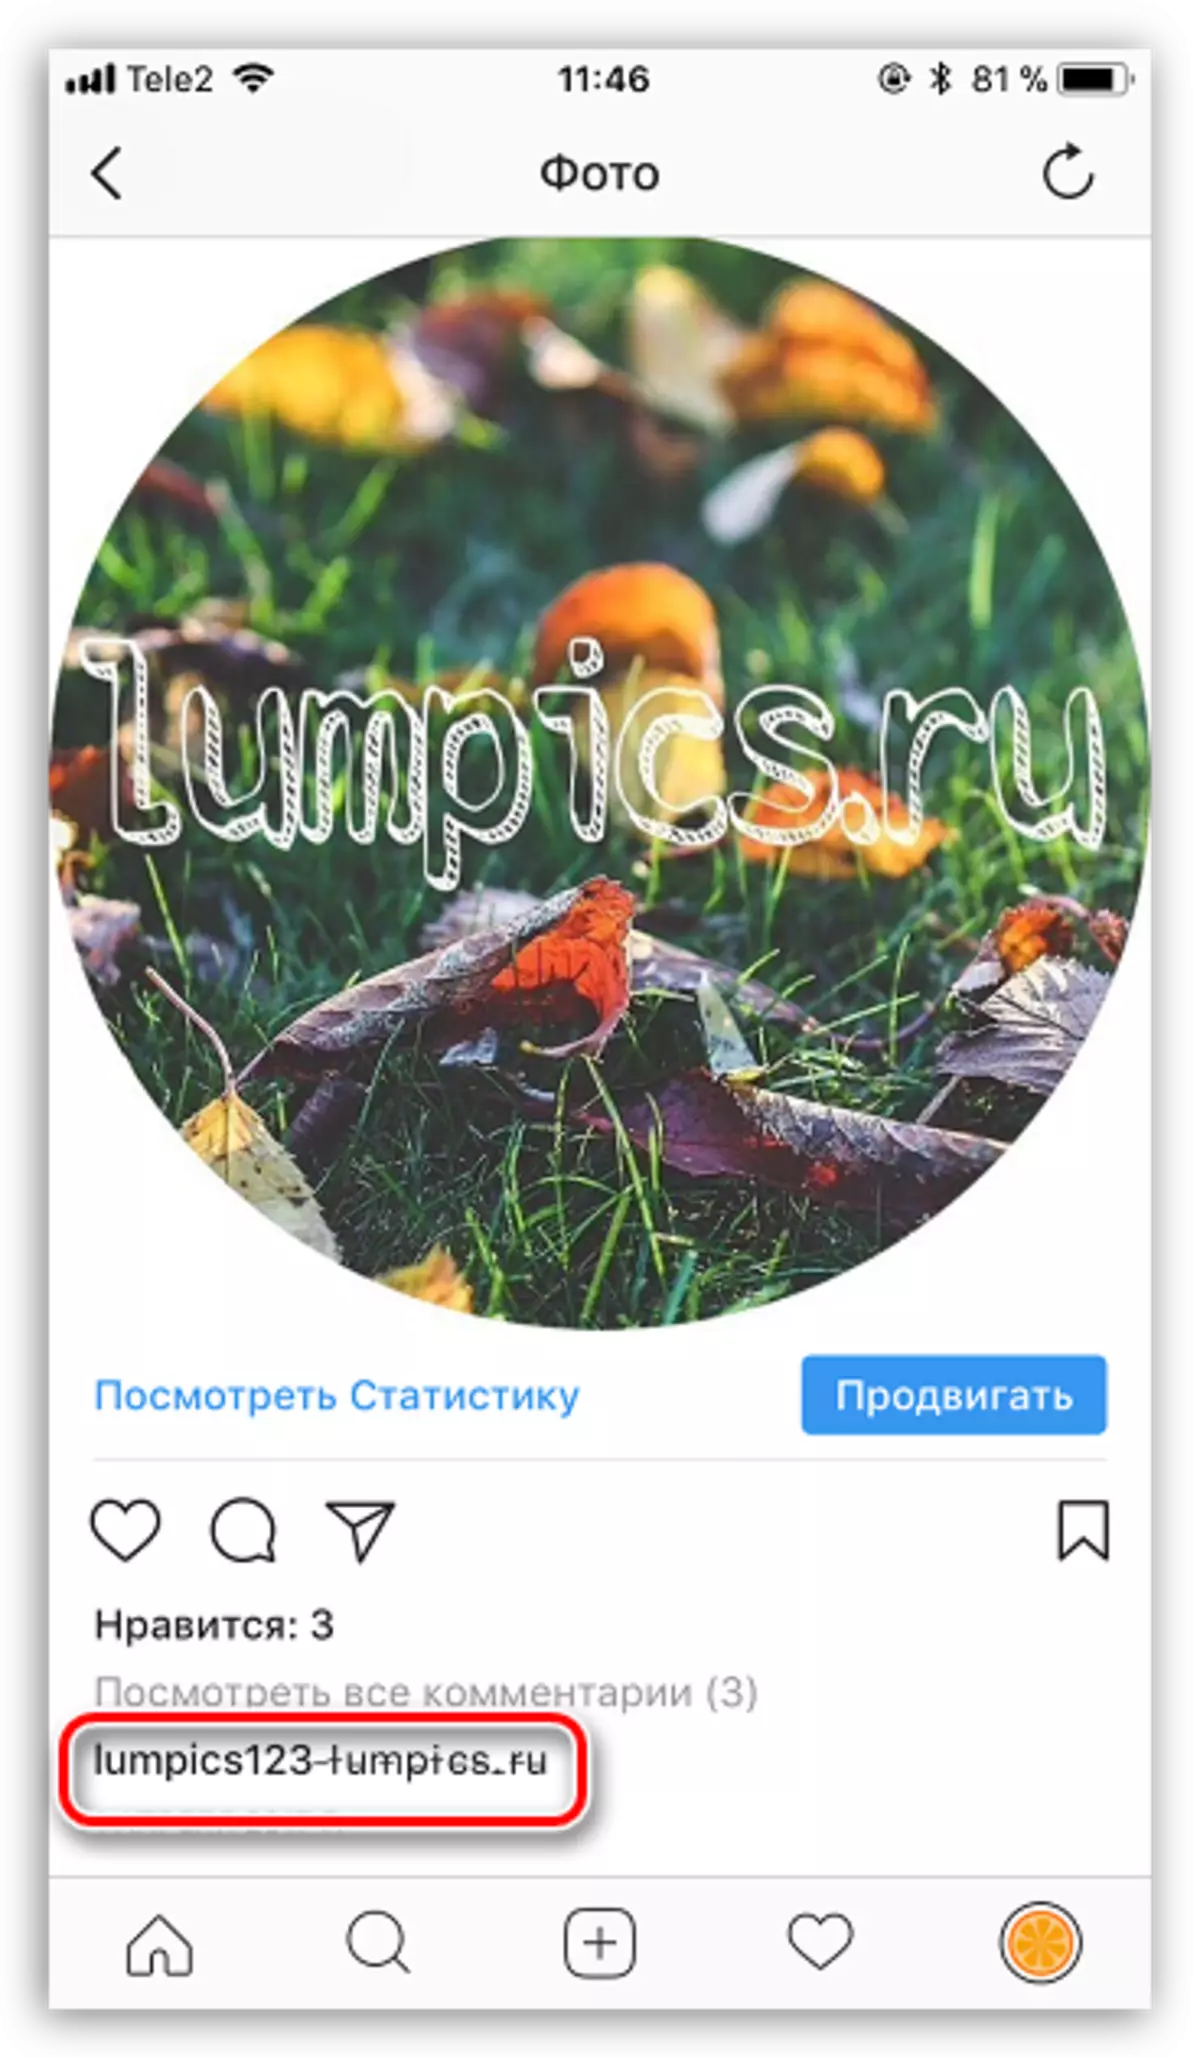 Матни таъкид дар Instagram Appendion